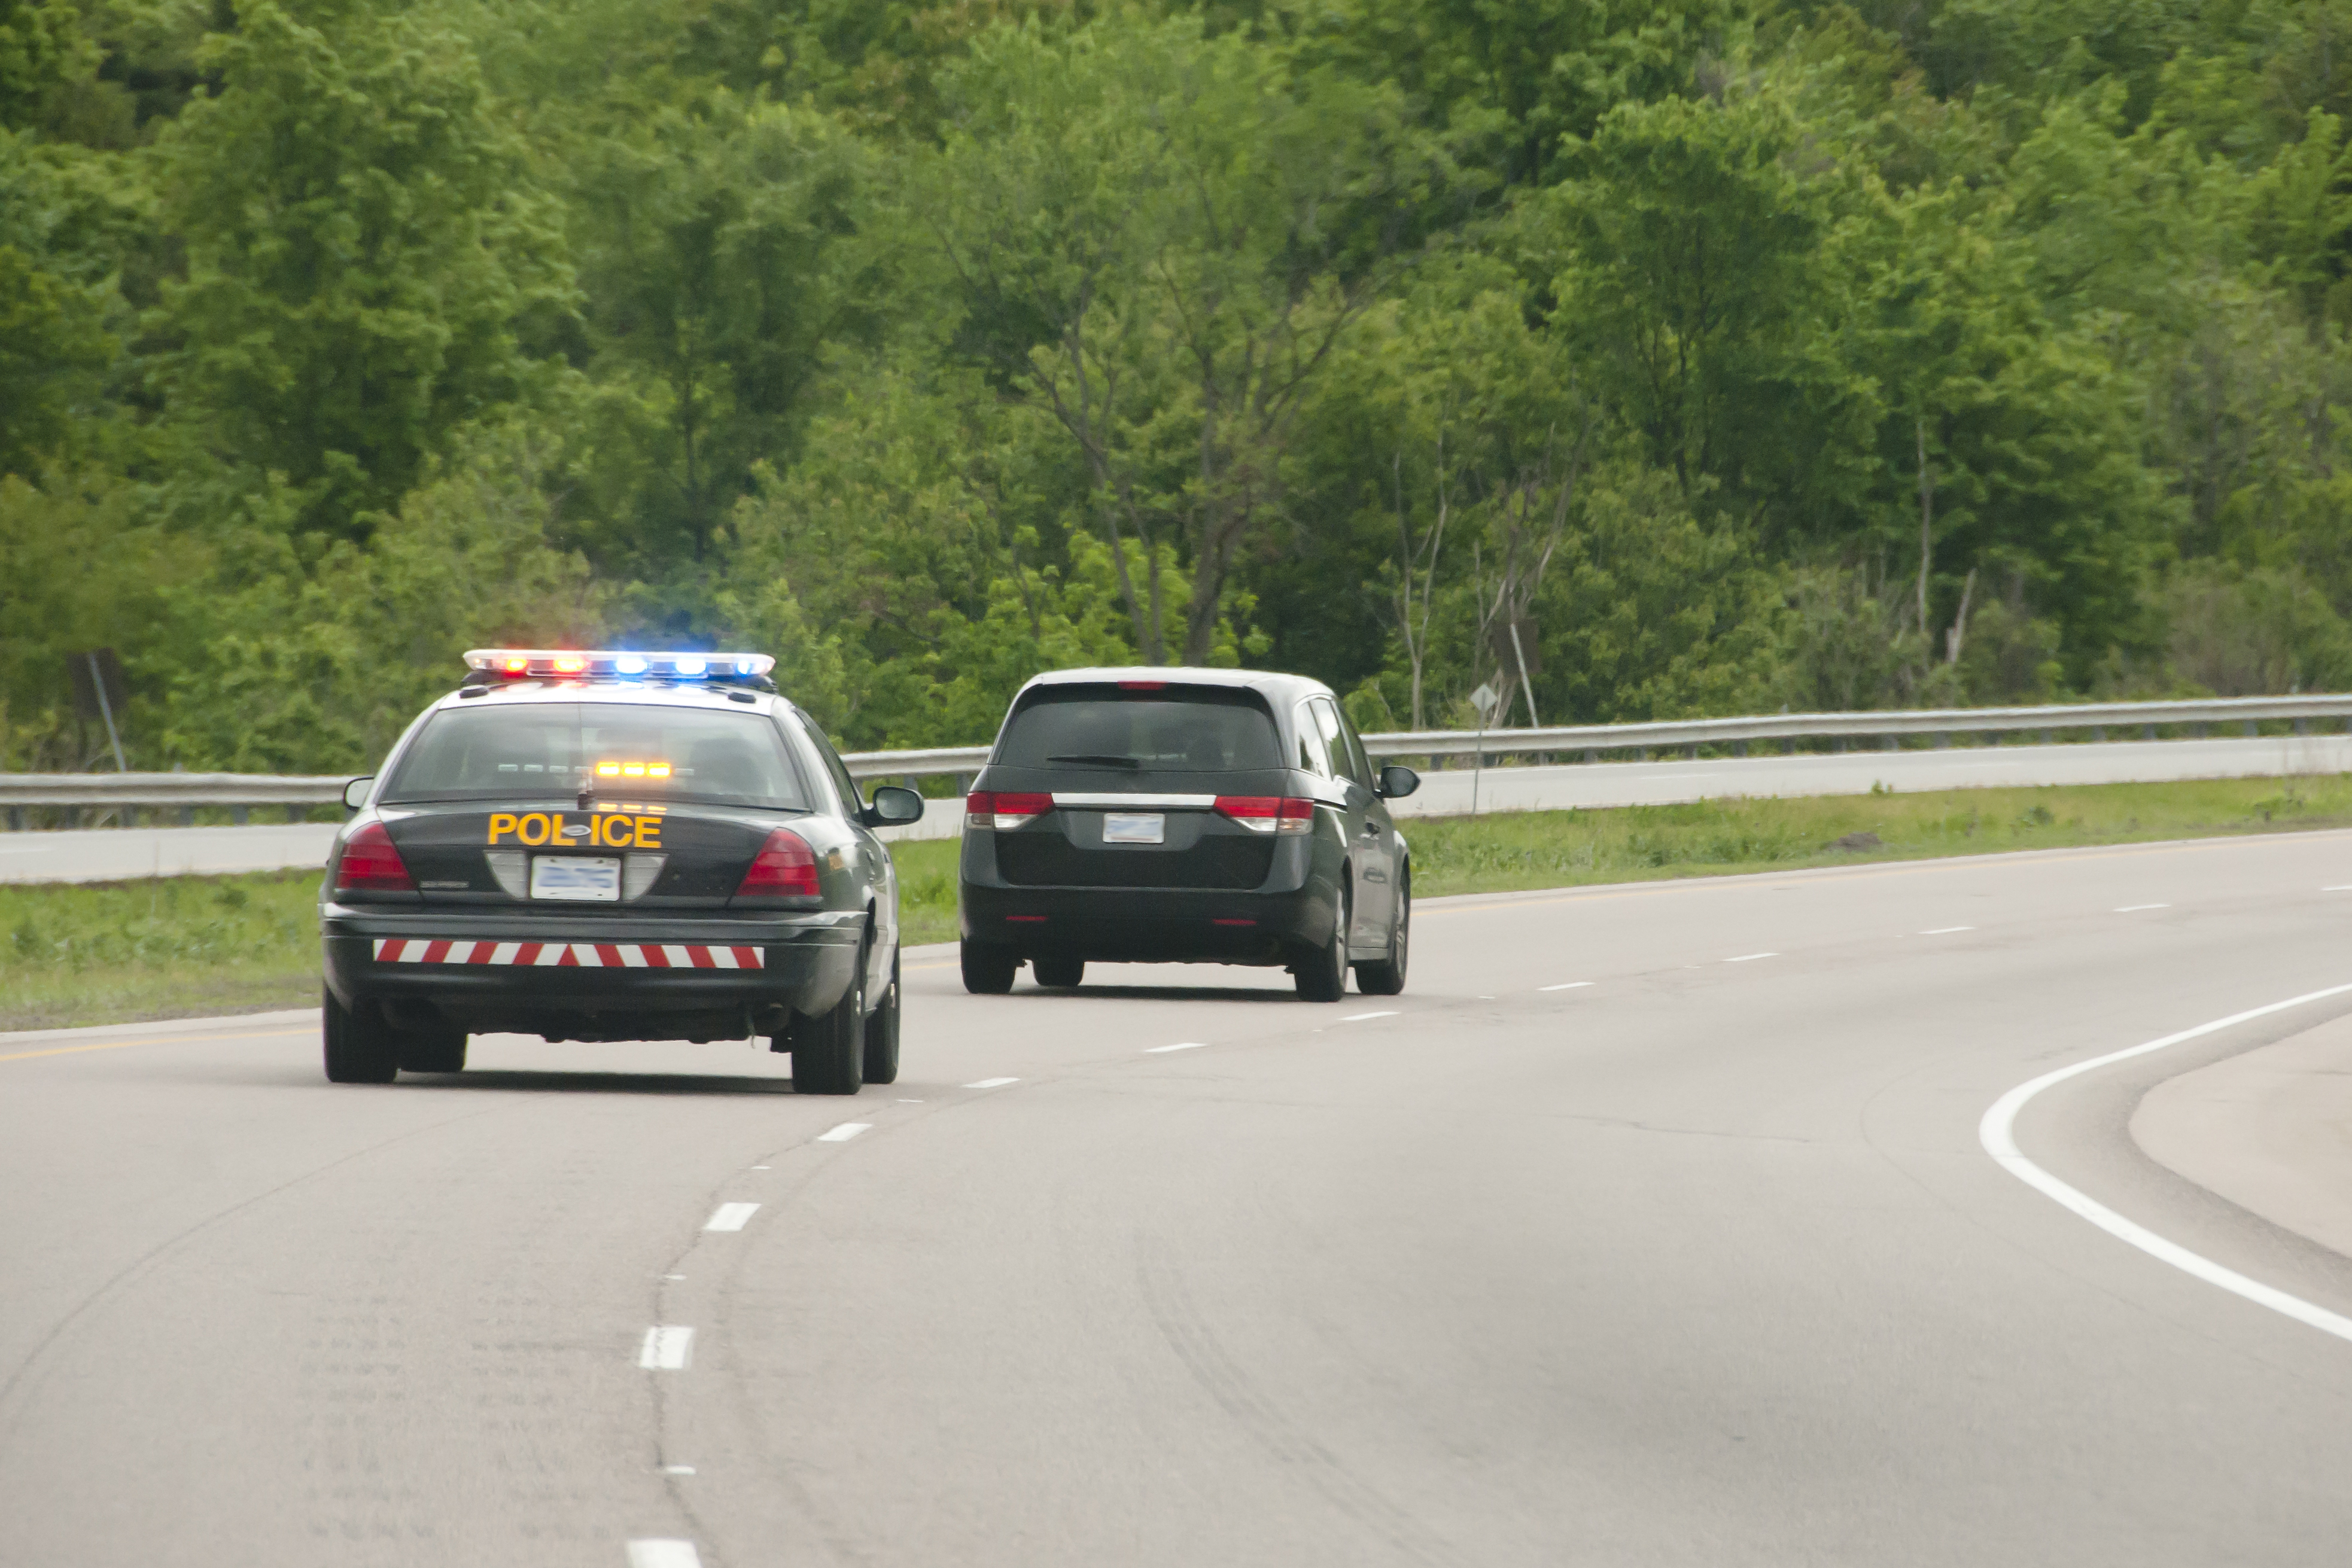 Cops Chasing A Car | Source: Shutterstock